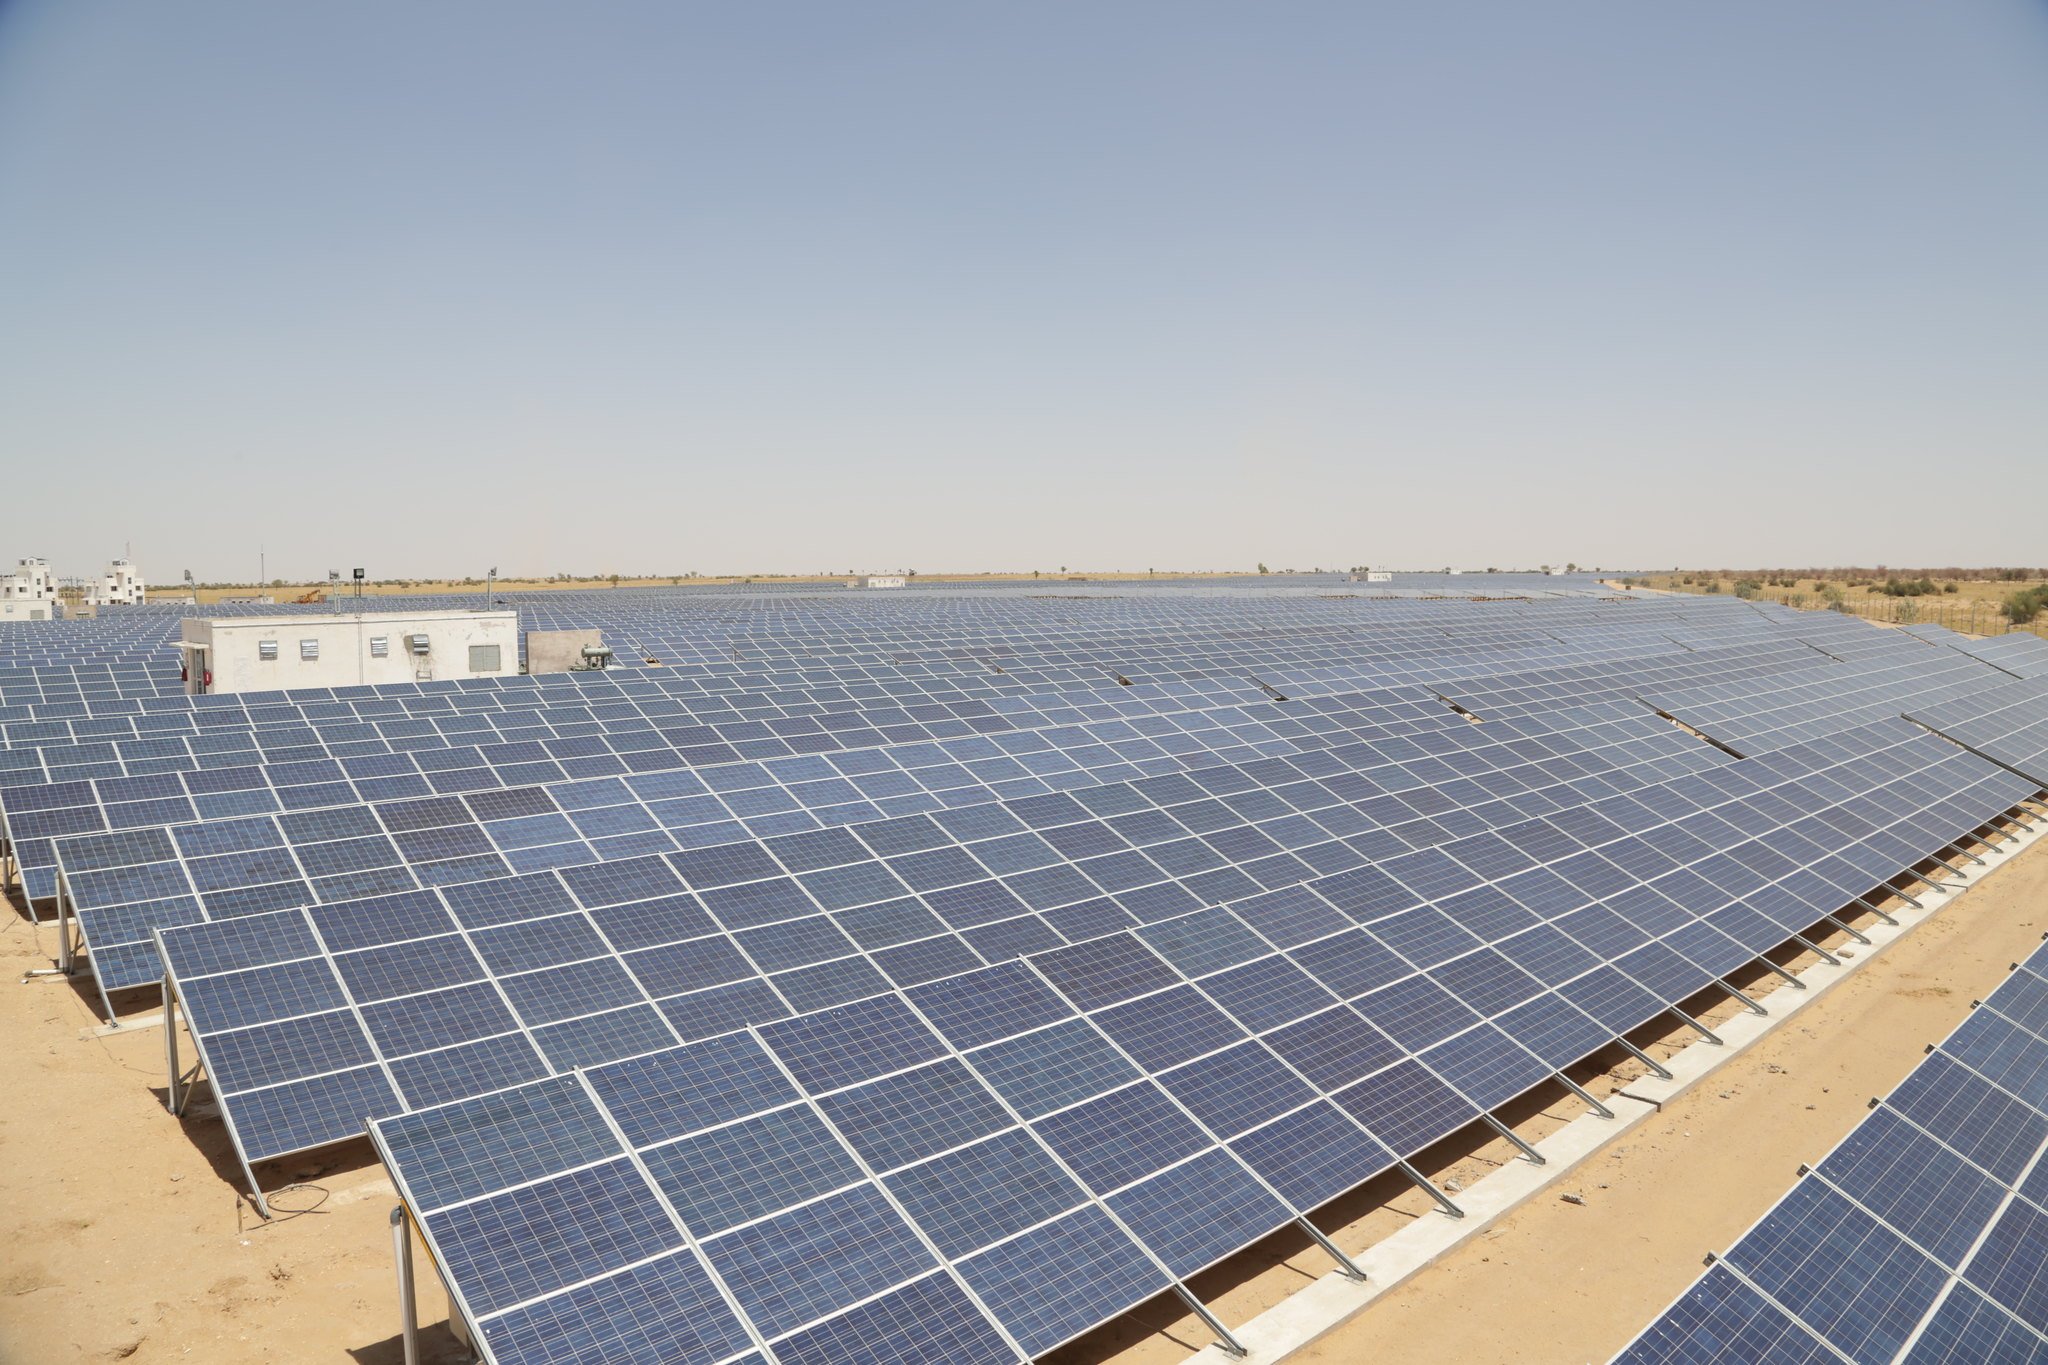 A solar farm in the desert